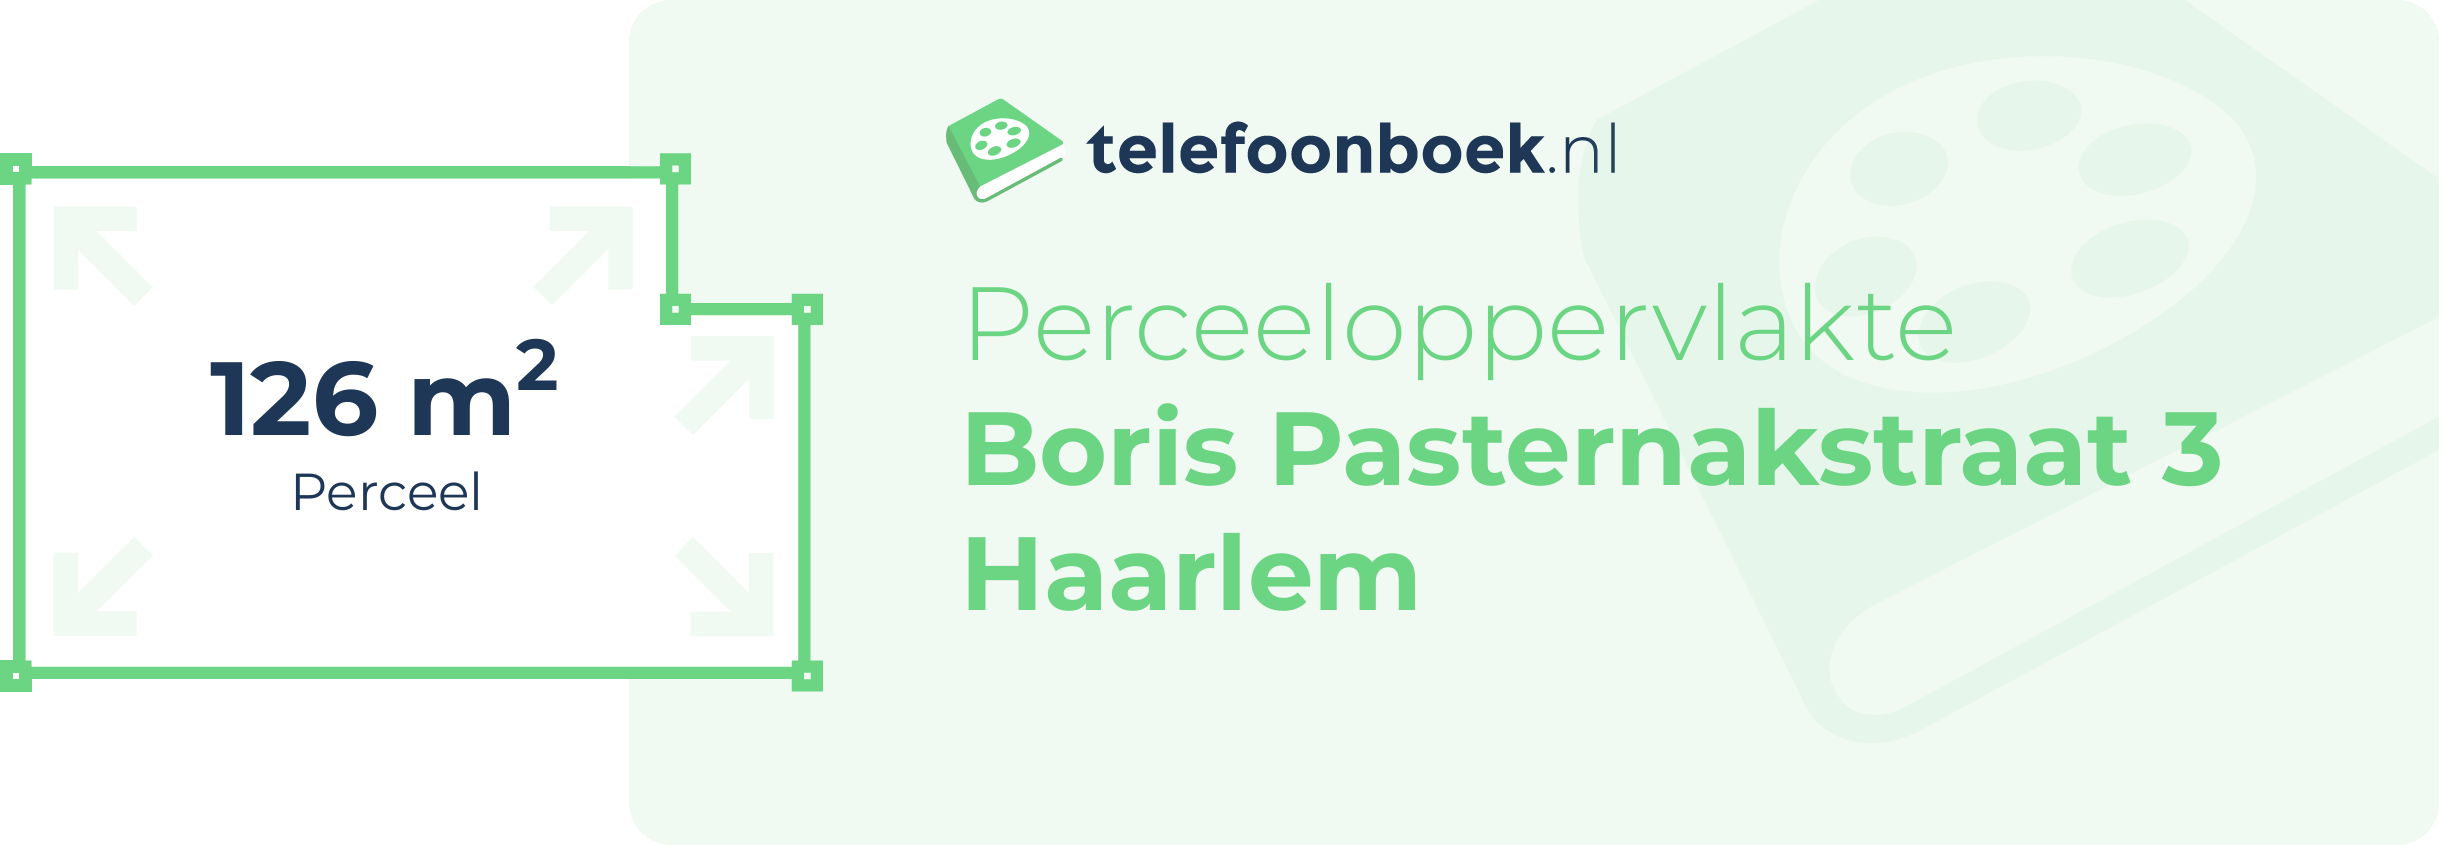 Perceeloppervlakte Boris Pasternakstraat 3 Haarlem